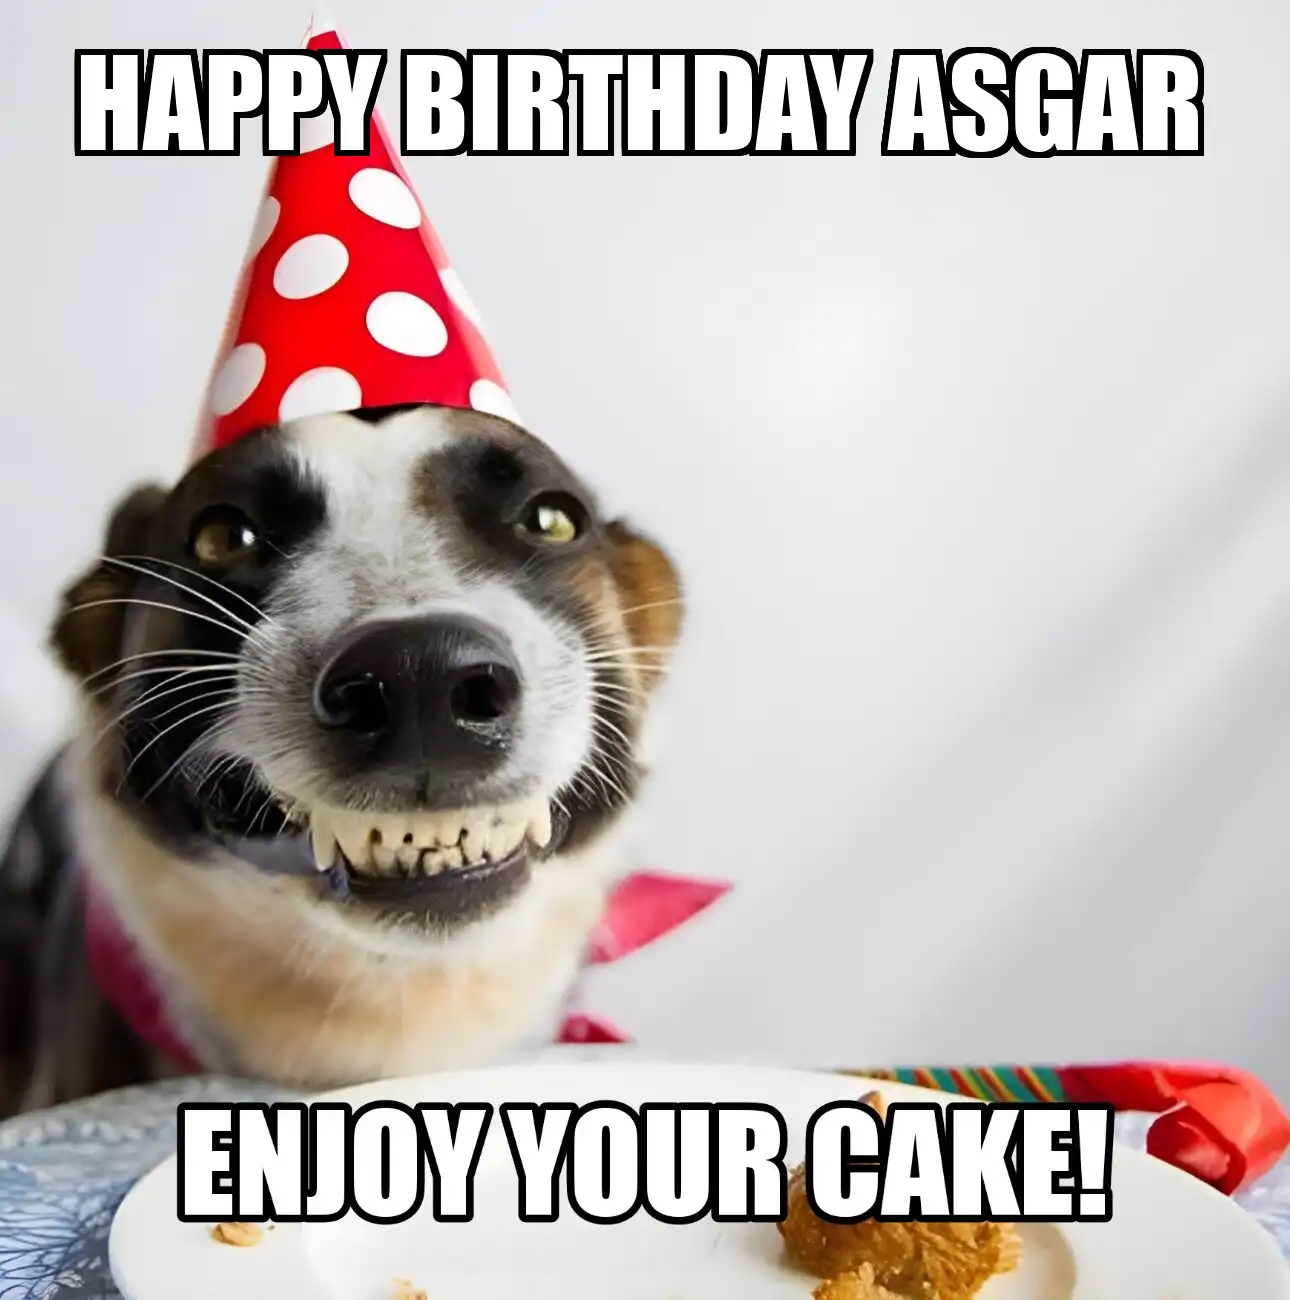 Happy Birthday Asgar Enjoy Your Cake Dog Meme